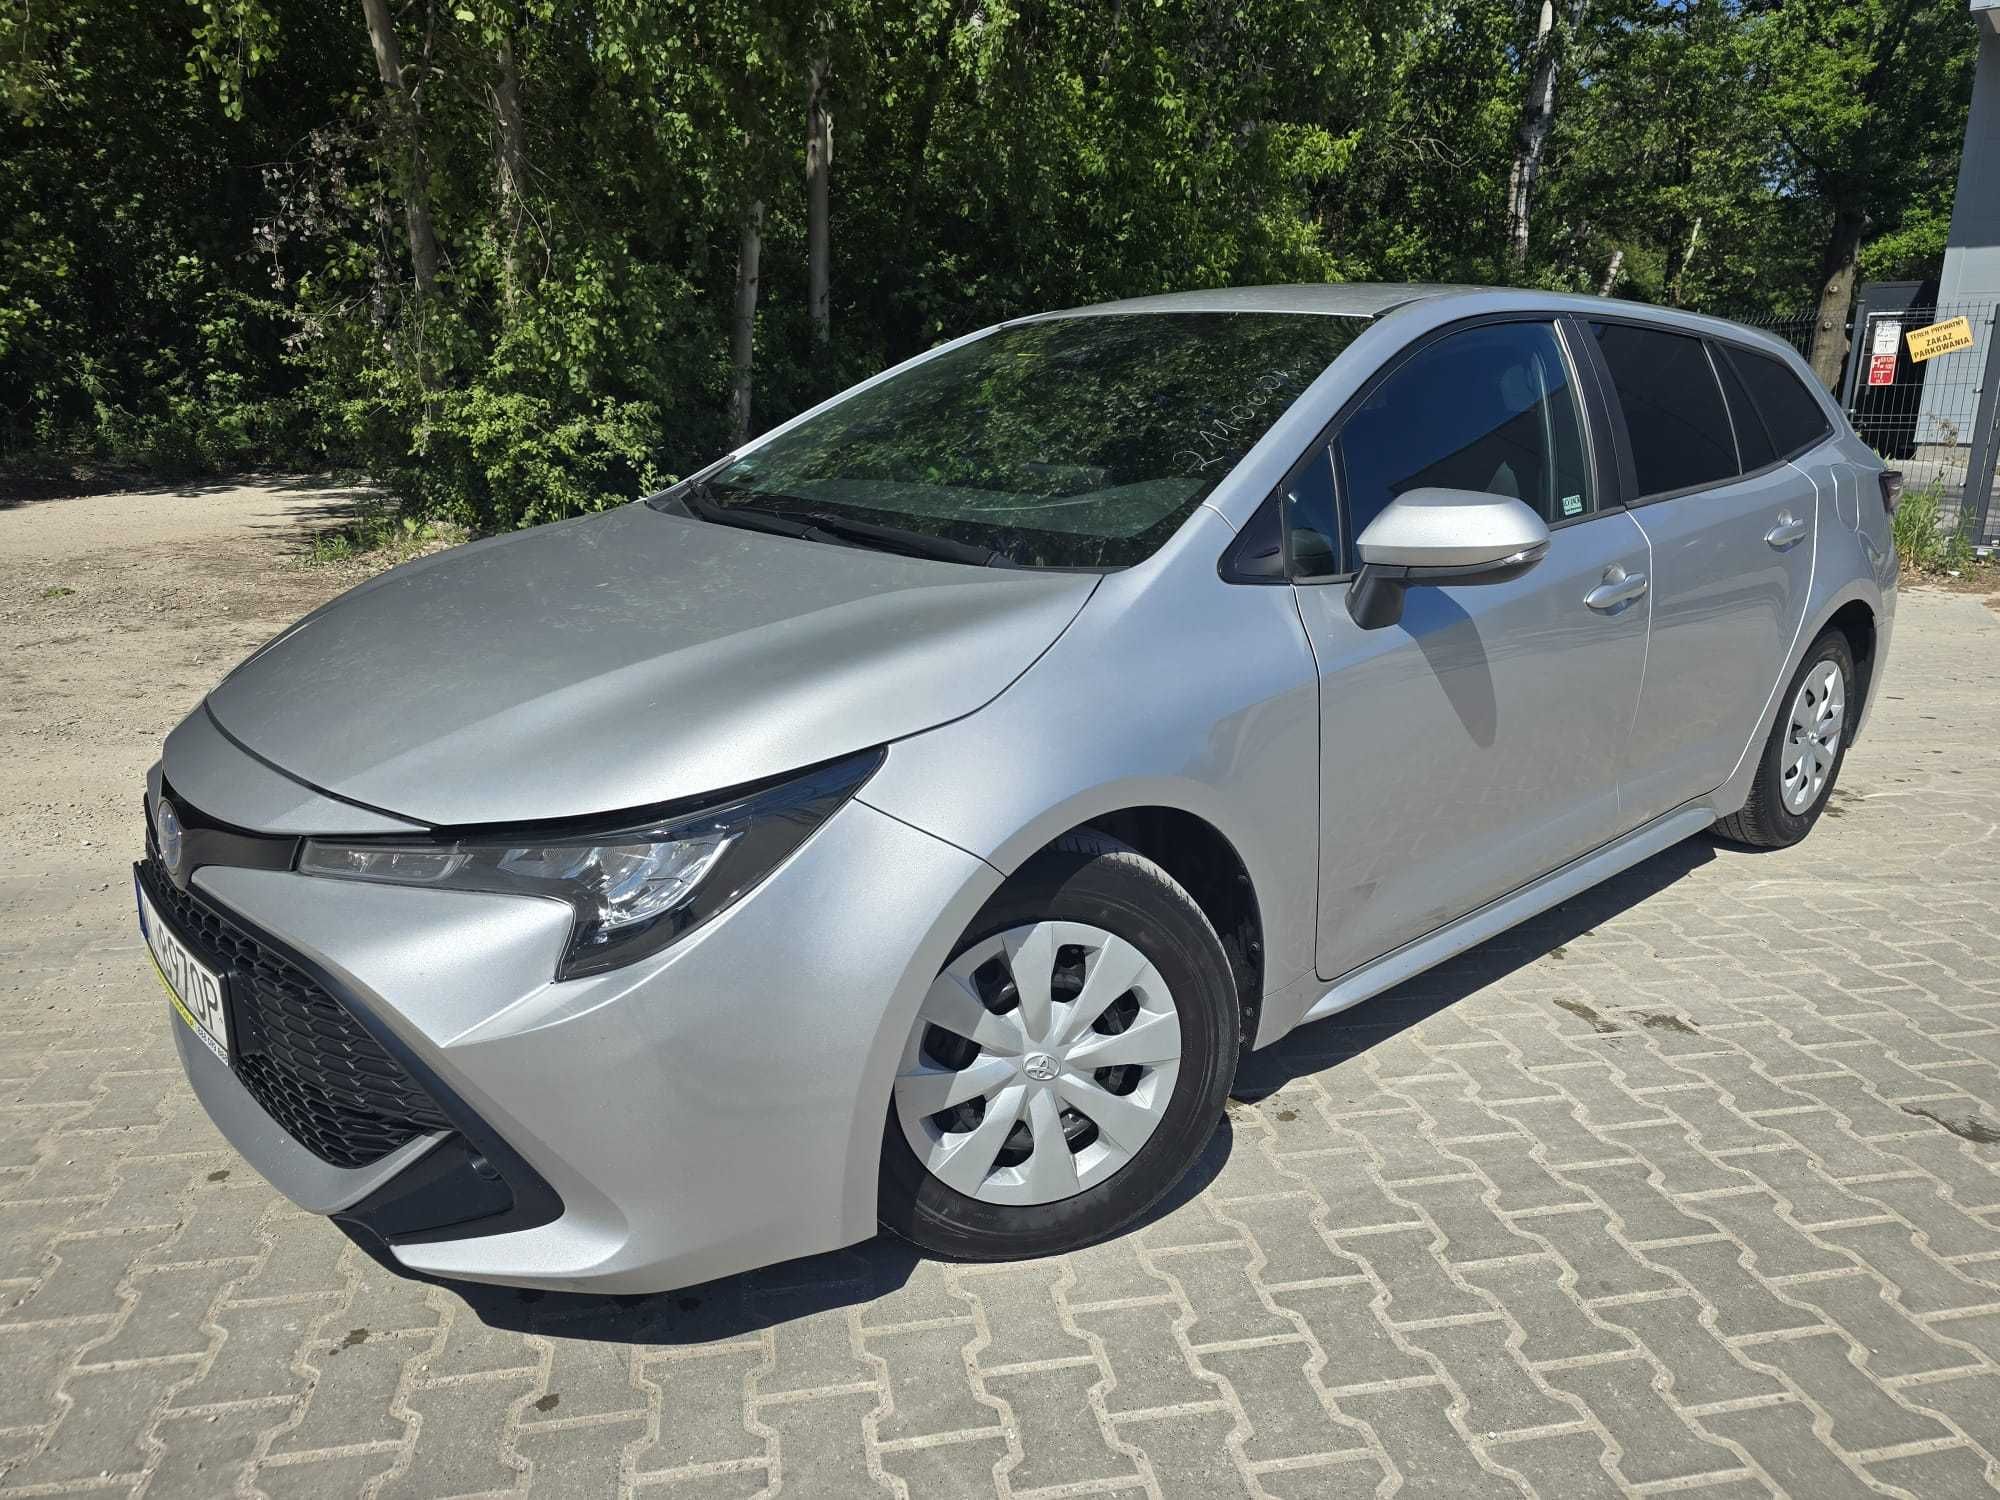 Toyota Corolla 1.8 Hybrid LPG 2020r. Salon Polska  Fv Vat 23% Brutto